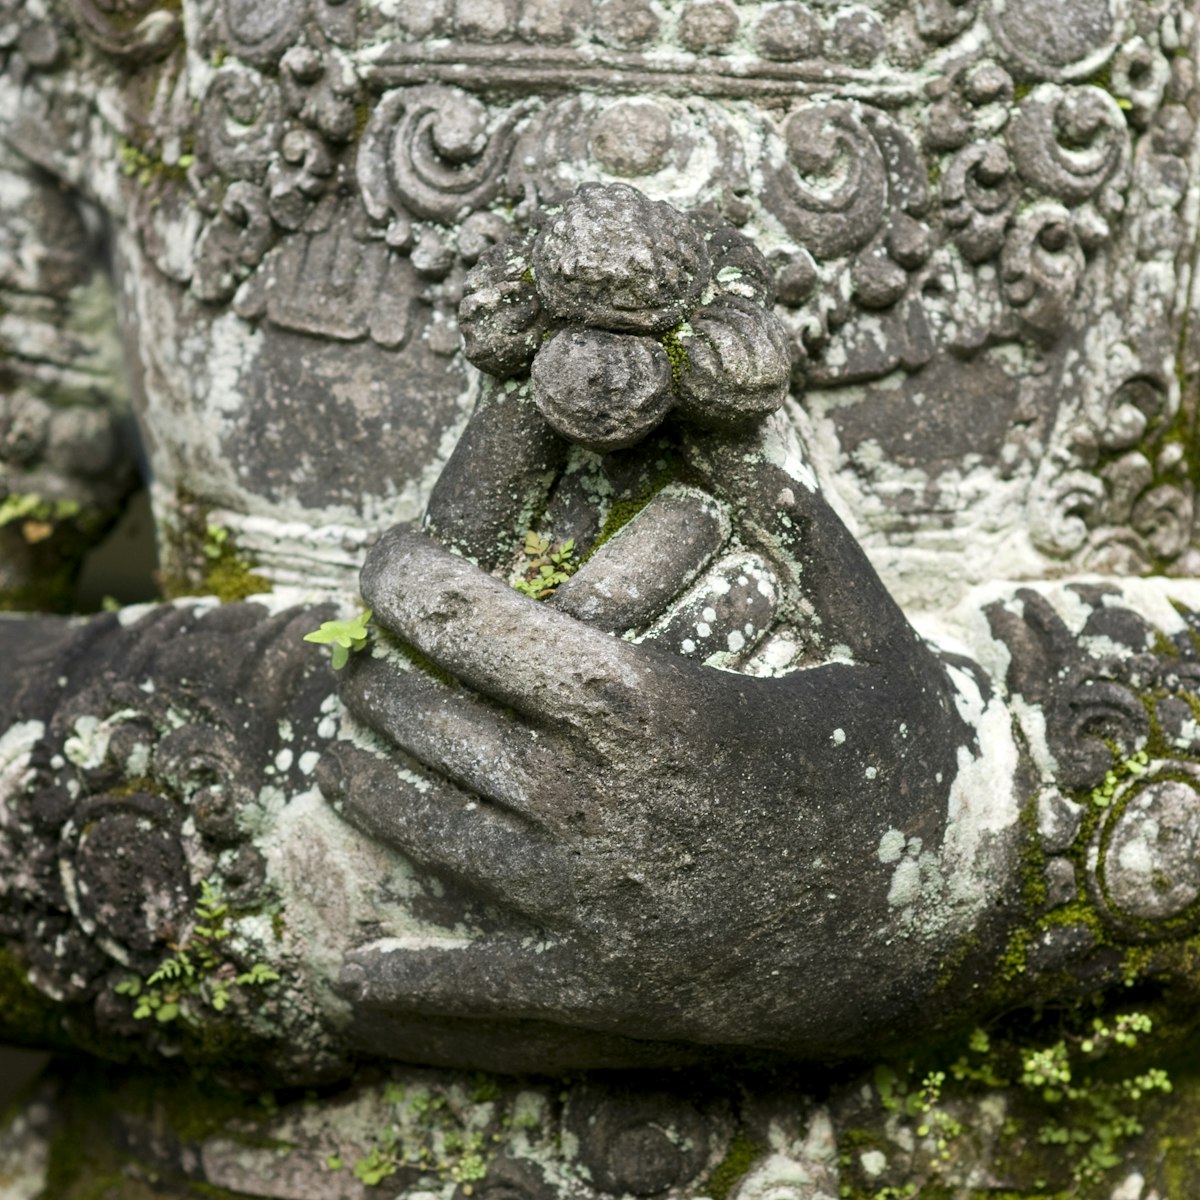 Stone sculpture, Museum Negeri Propinsi Bali.